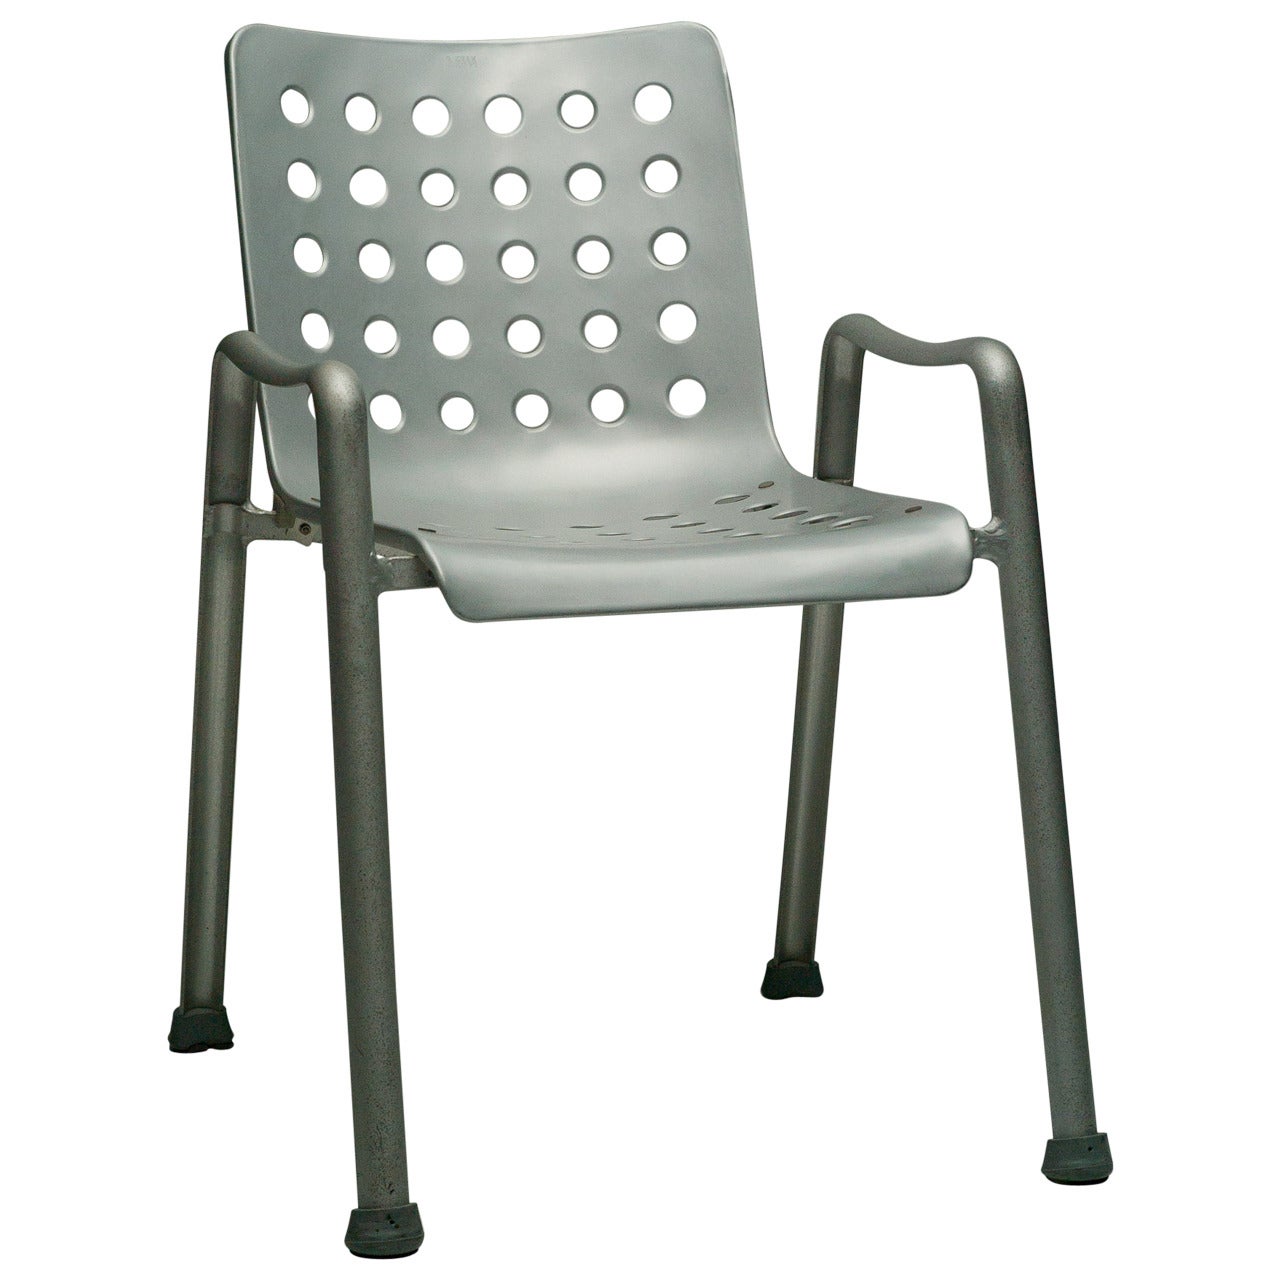 Hans Coray Landi Aluminium Stacking Chair